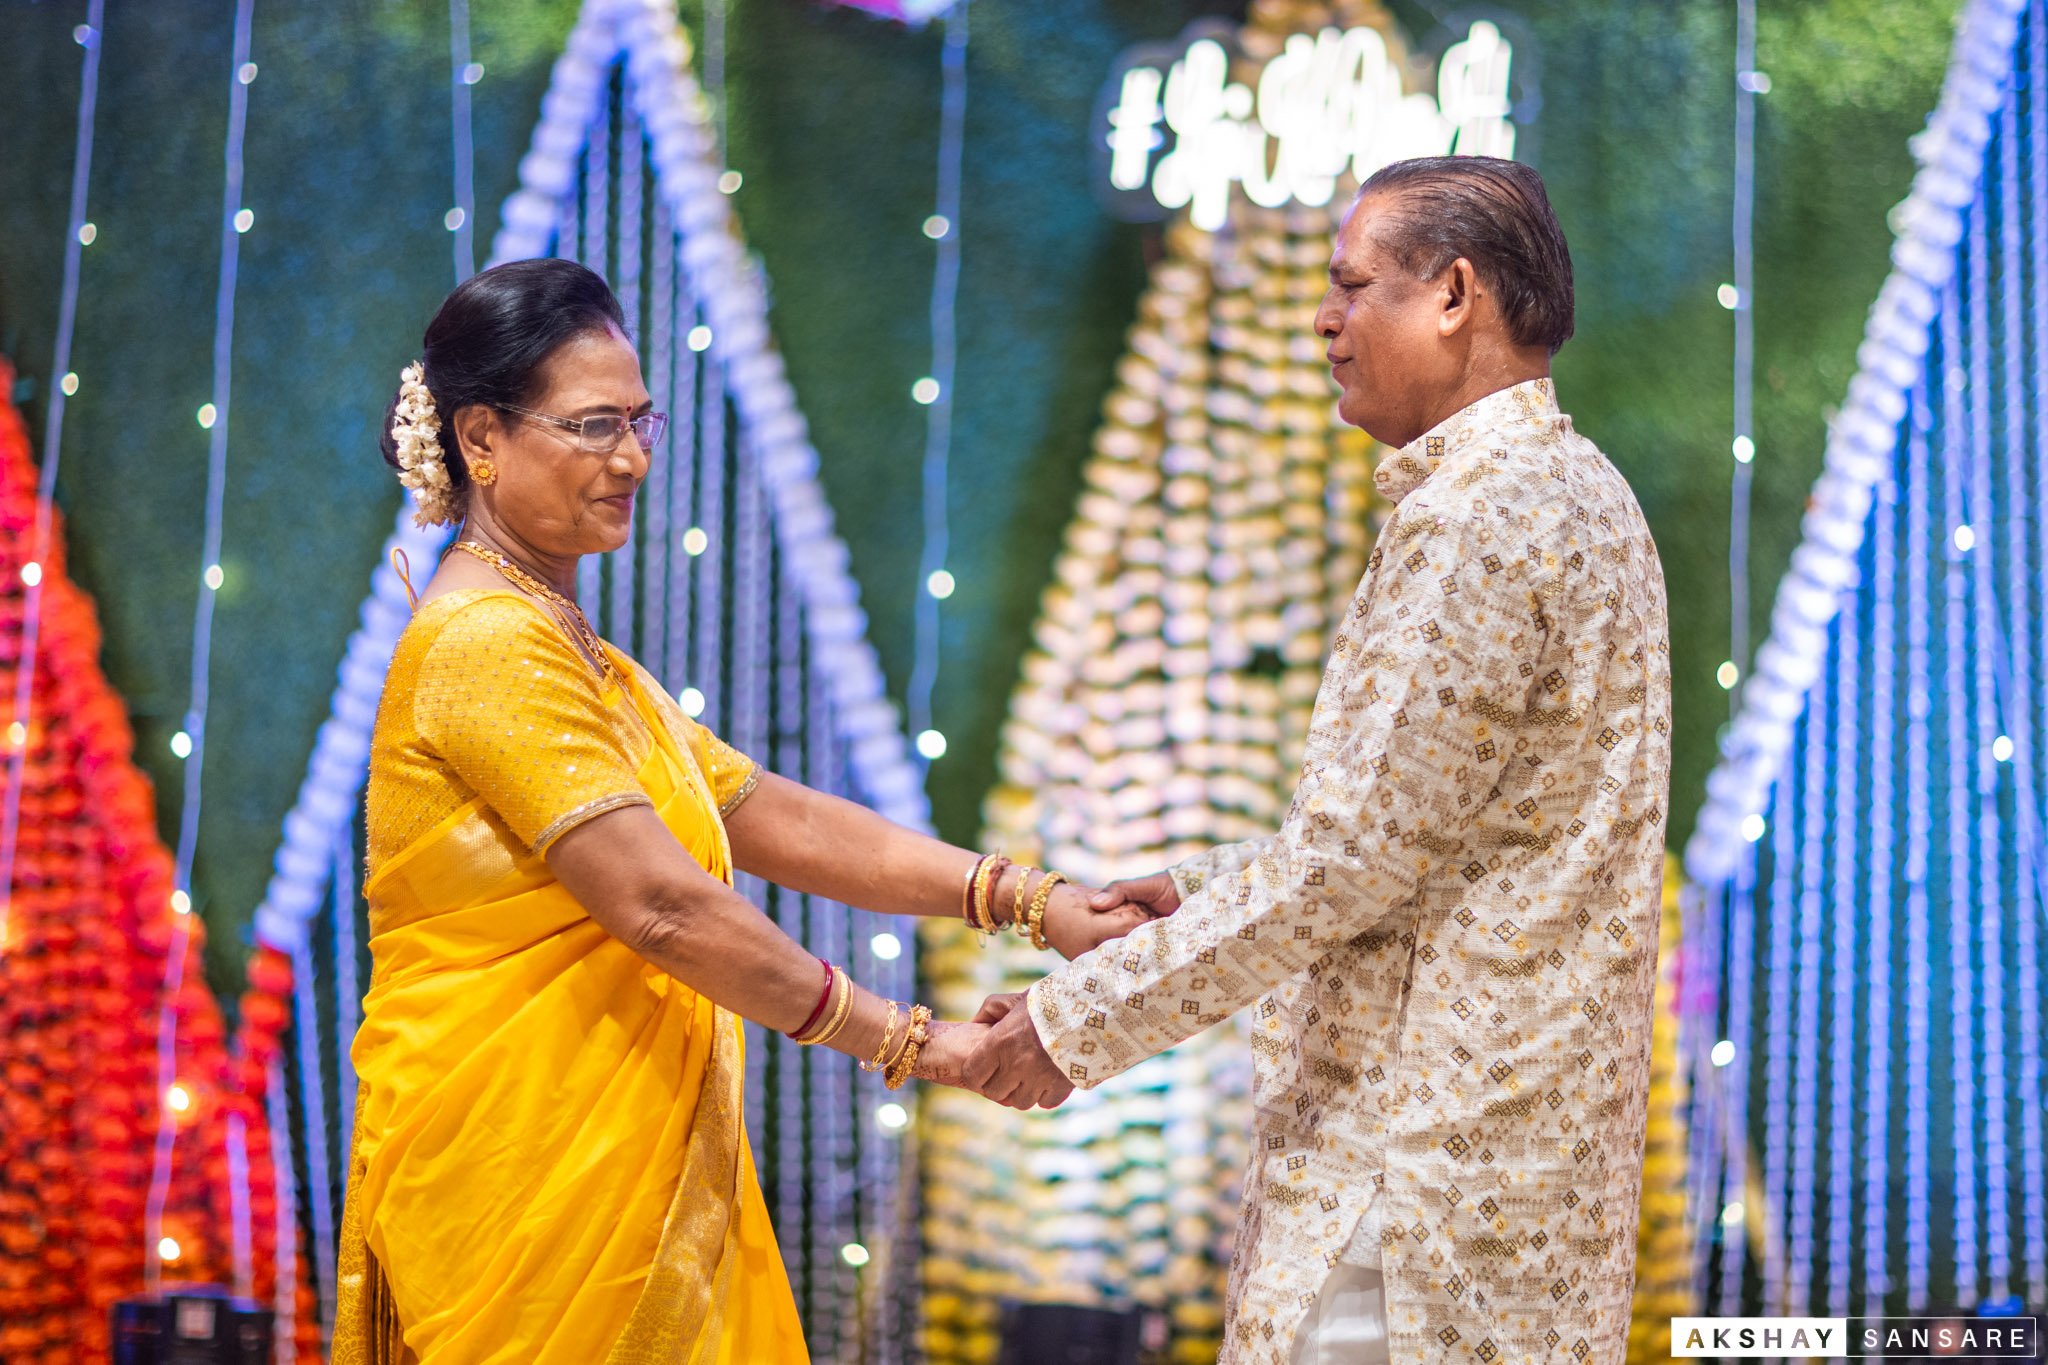 Lipika x Bhavya Compress Akshay Sansare Photography & Films Best wedding photographers in mumbai india-15.jpg